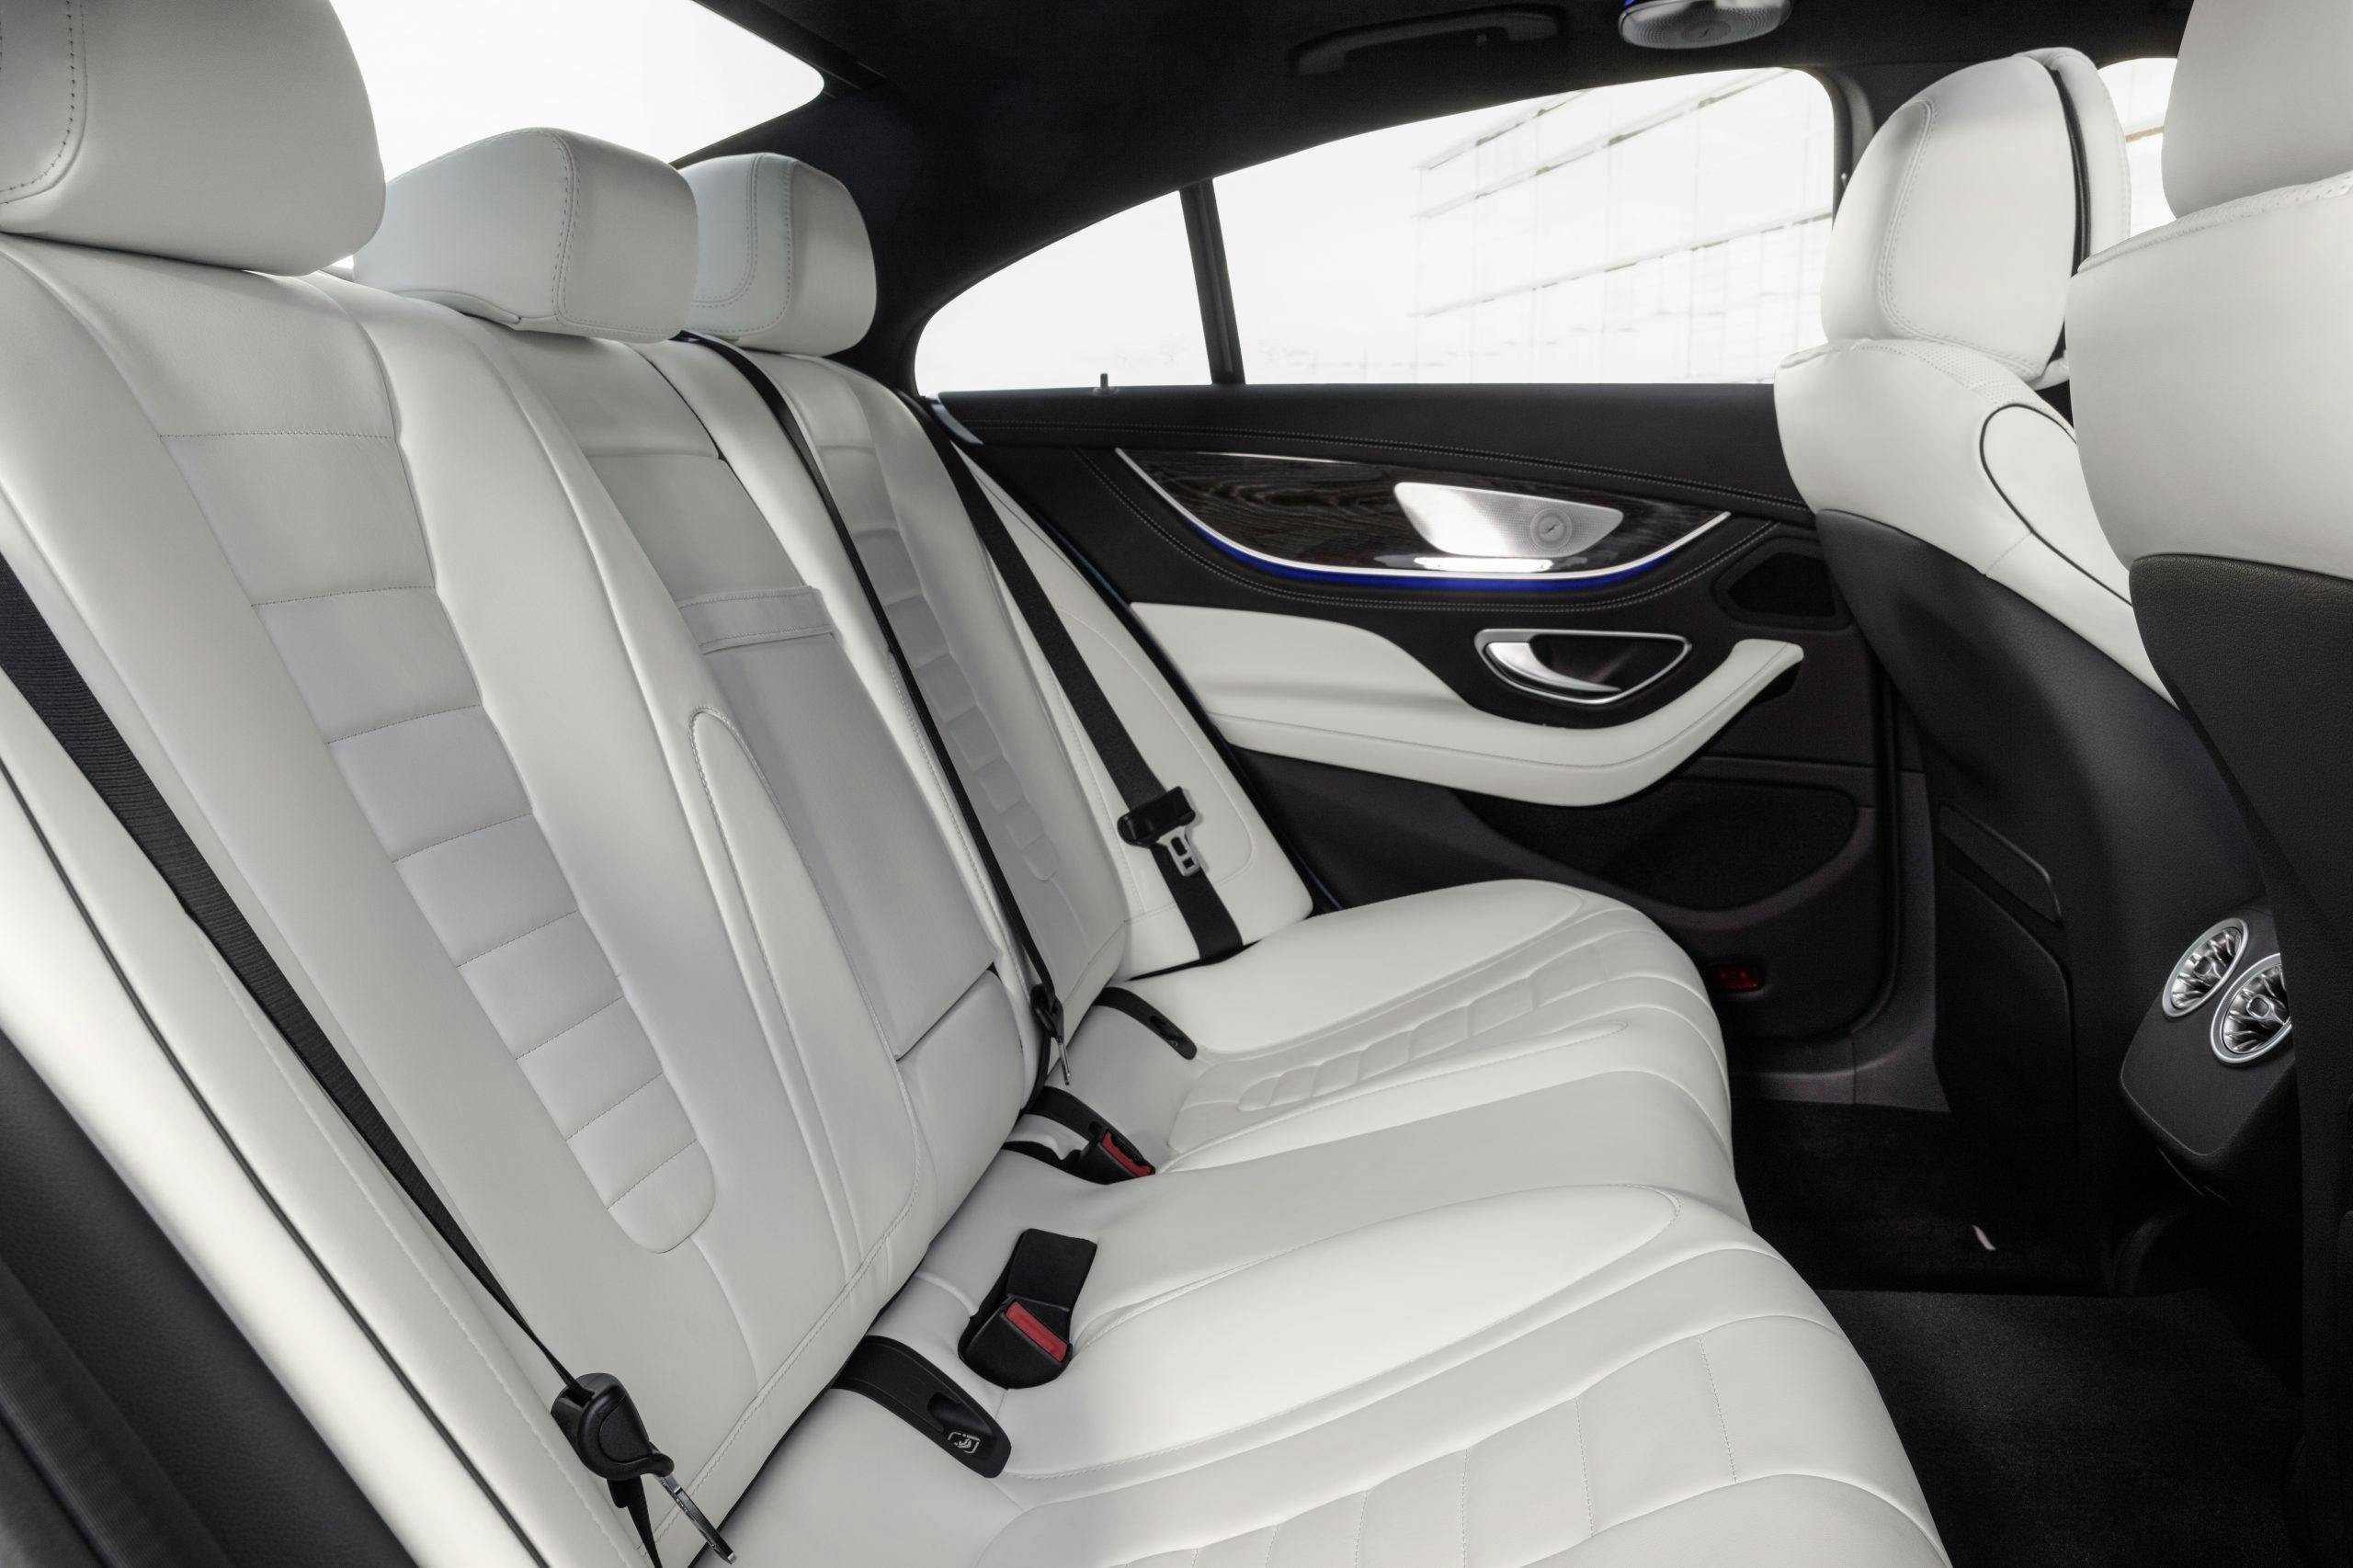 2021 Mercedes-Benz CLS 450 4Matic Coupé interior rear seat